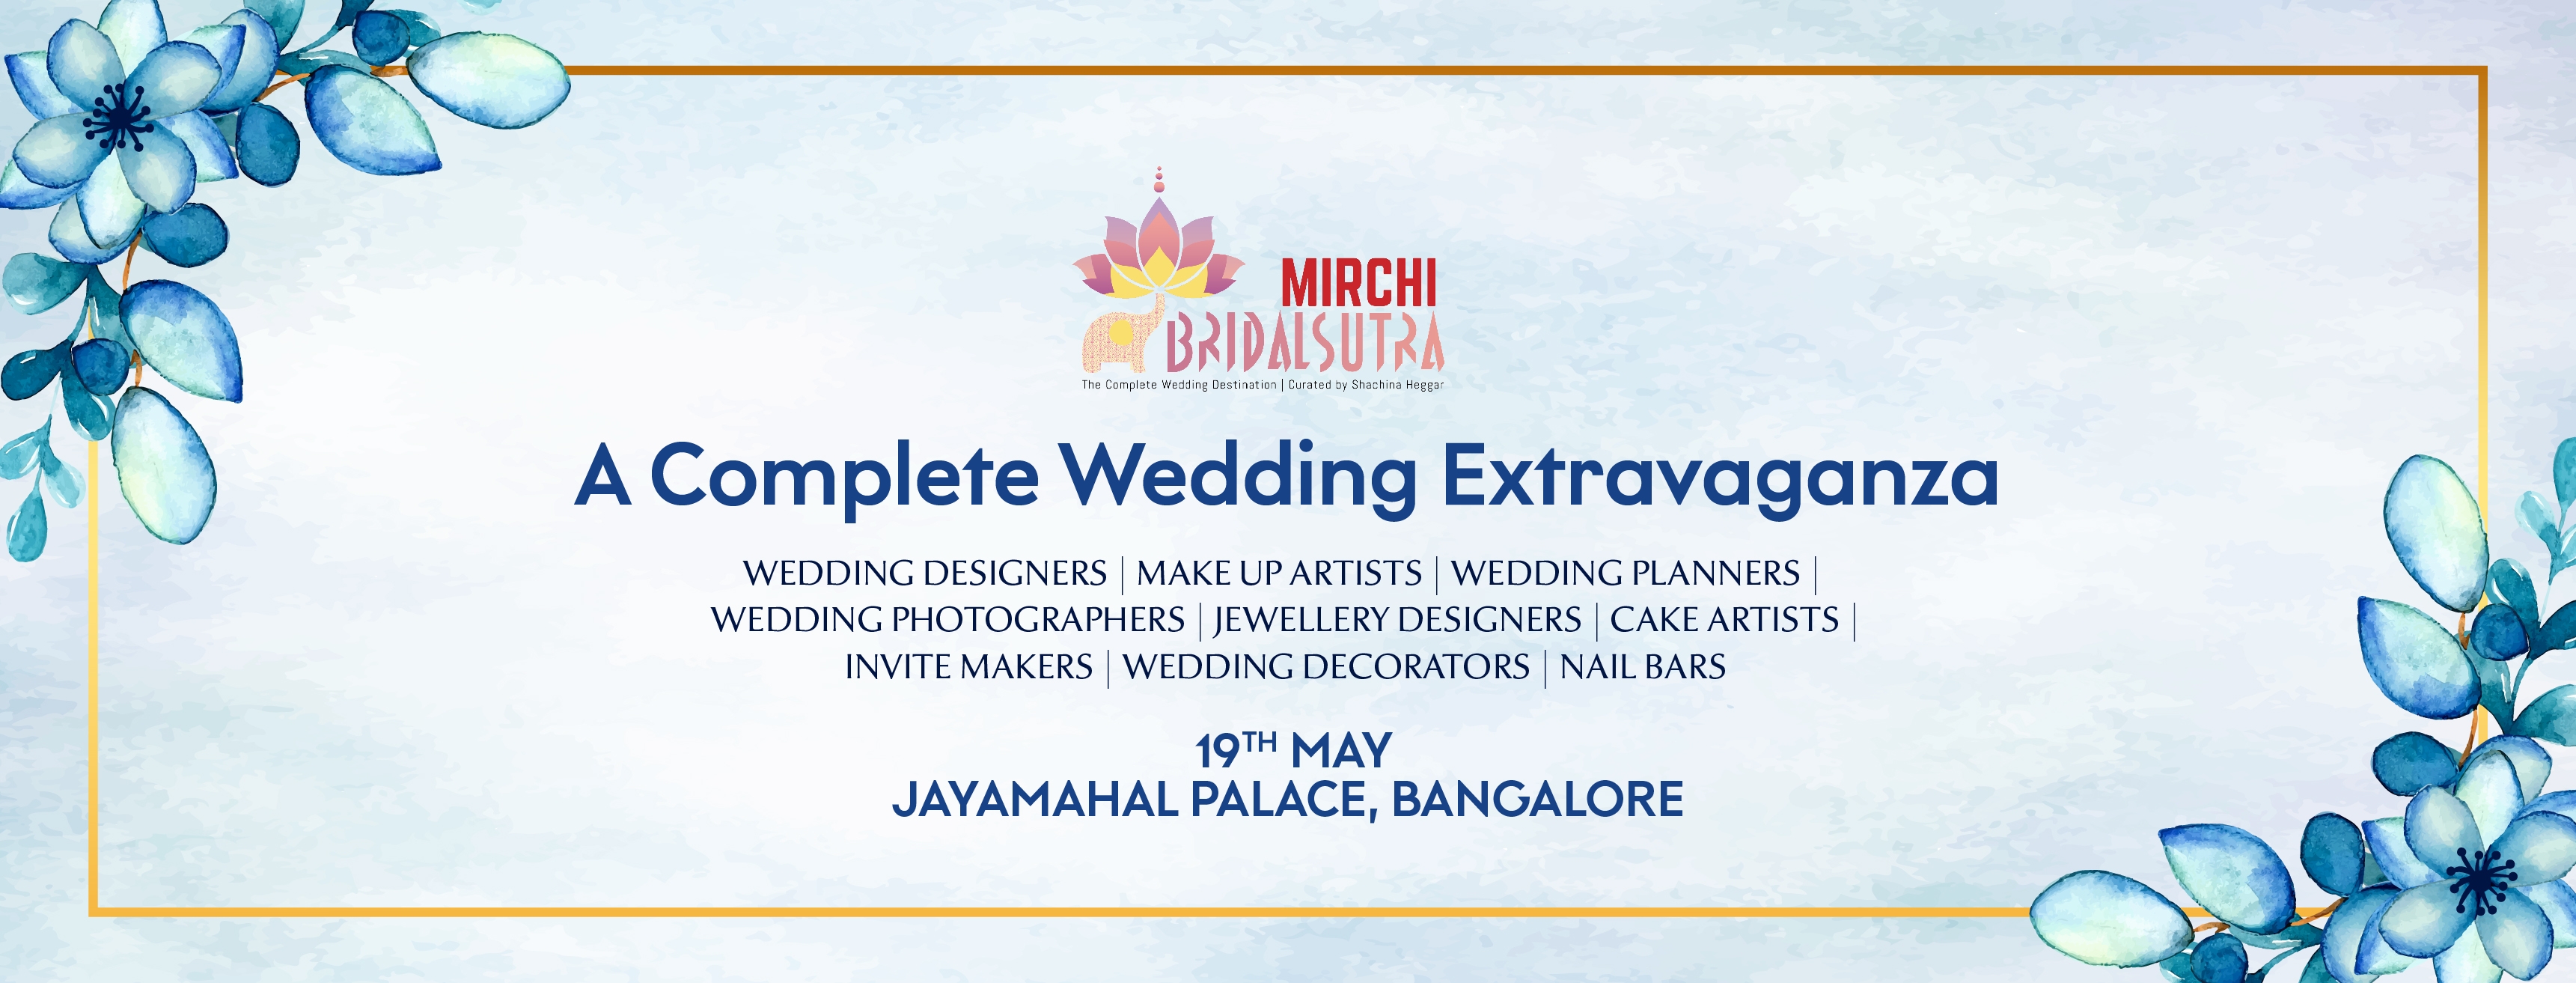 Bridal Sutra - A complete Wedding Extravaganza!, Bangalore, Karnataka, India